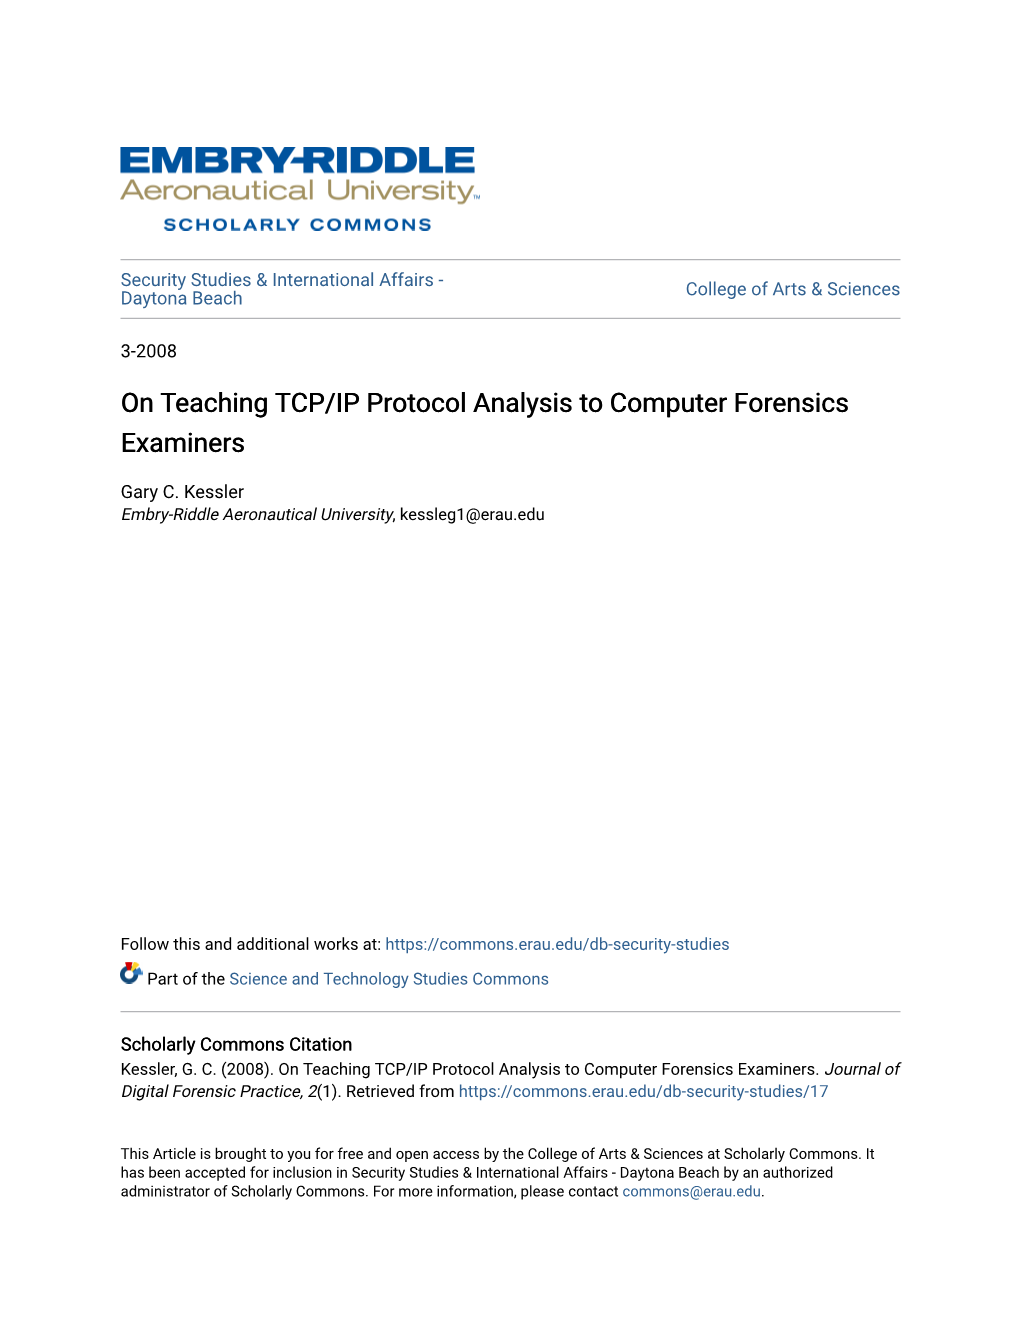 On Teaching TCP/IP Protocol Analysis to Computer Forensics Examiners